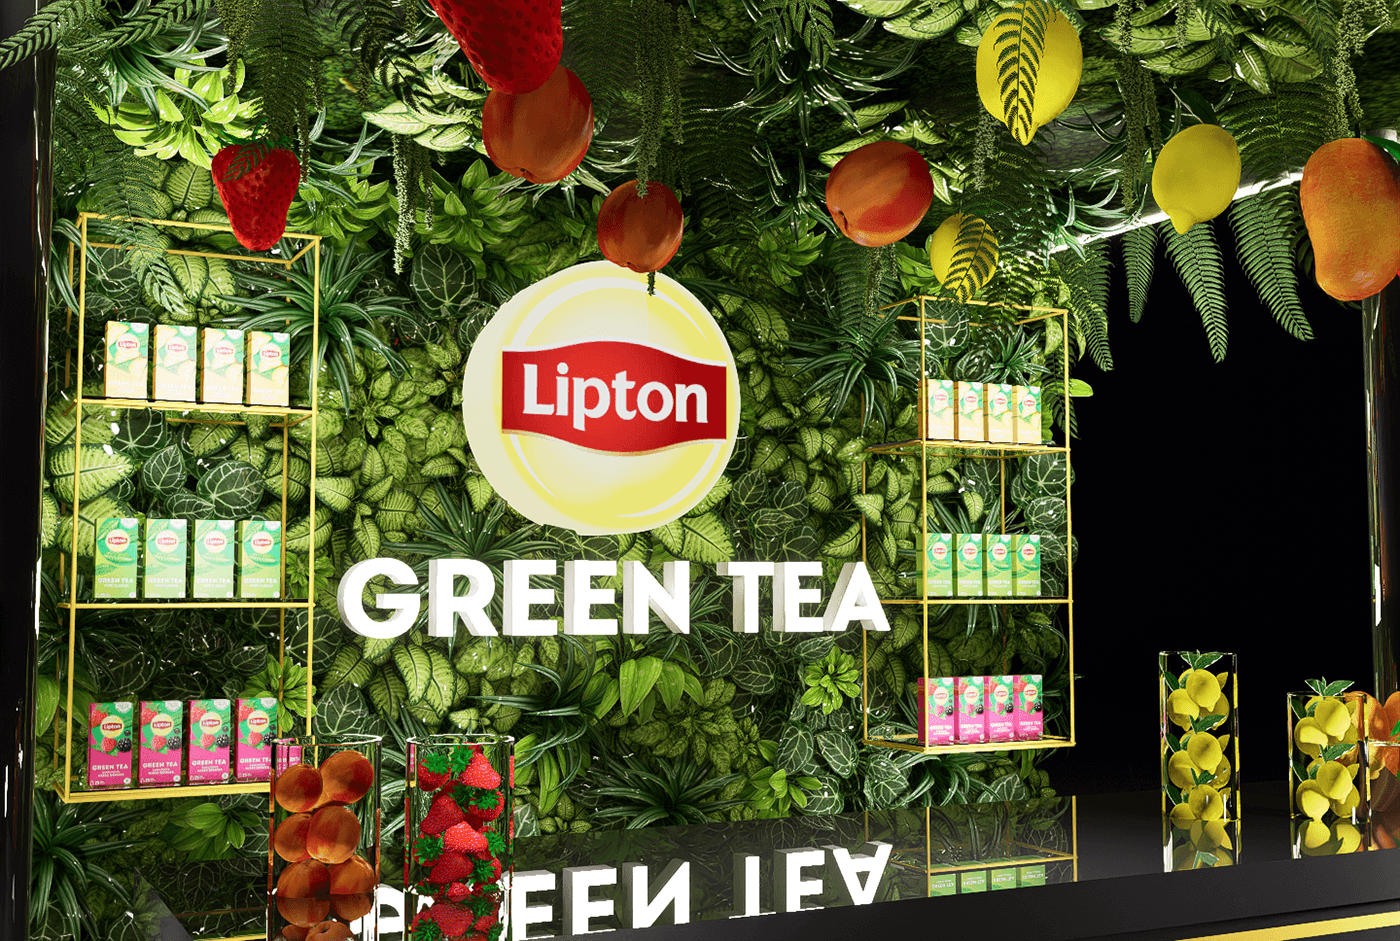 Lipton green tea booth Kiosk stall lipton  green tea